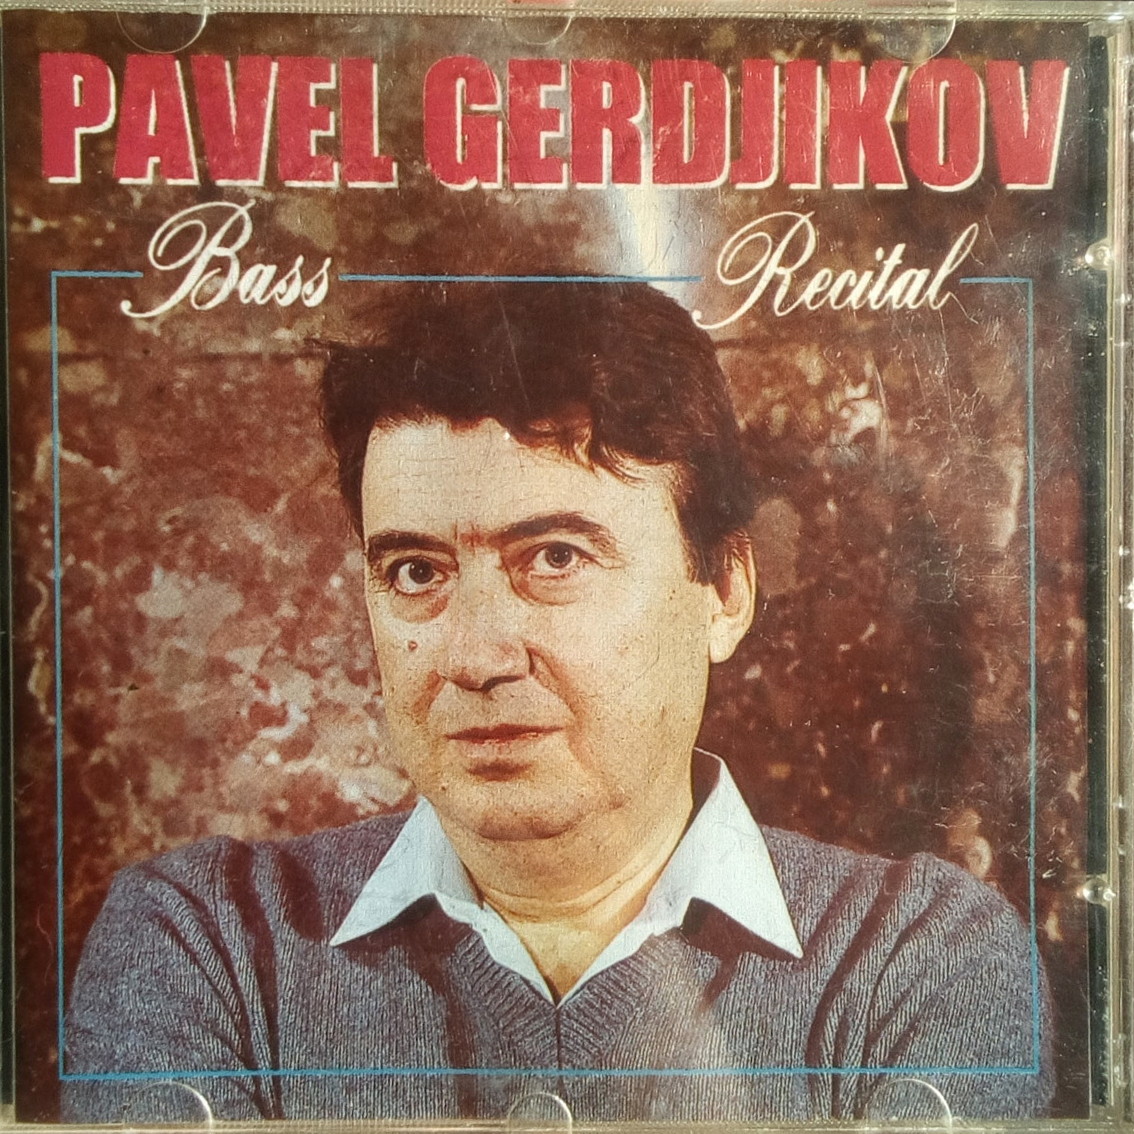 Pavel GERDJIKOV, bass. Recital